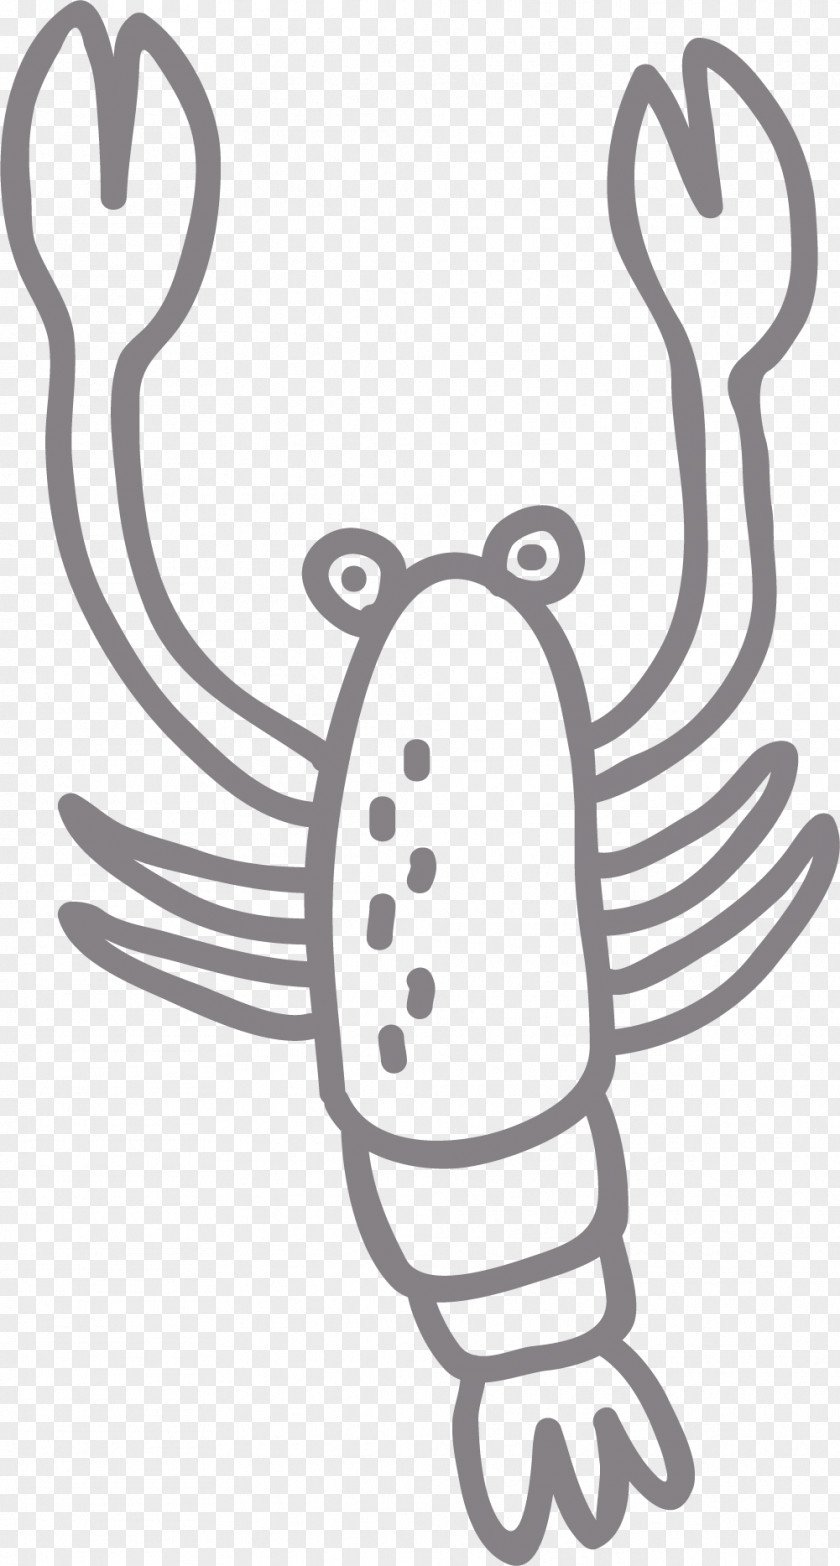 Line Prawns Lobster Shrimp And Prawn As Food PNG